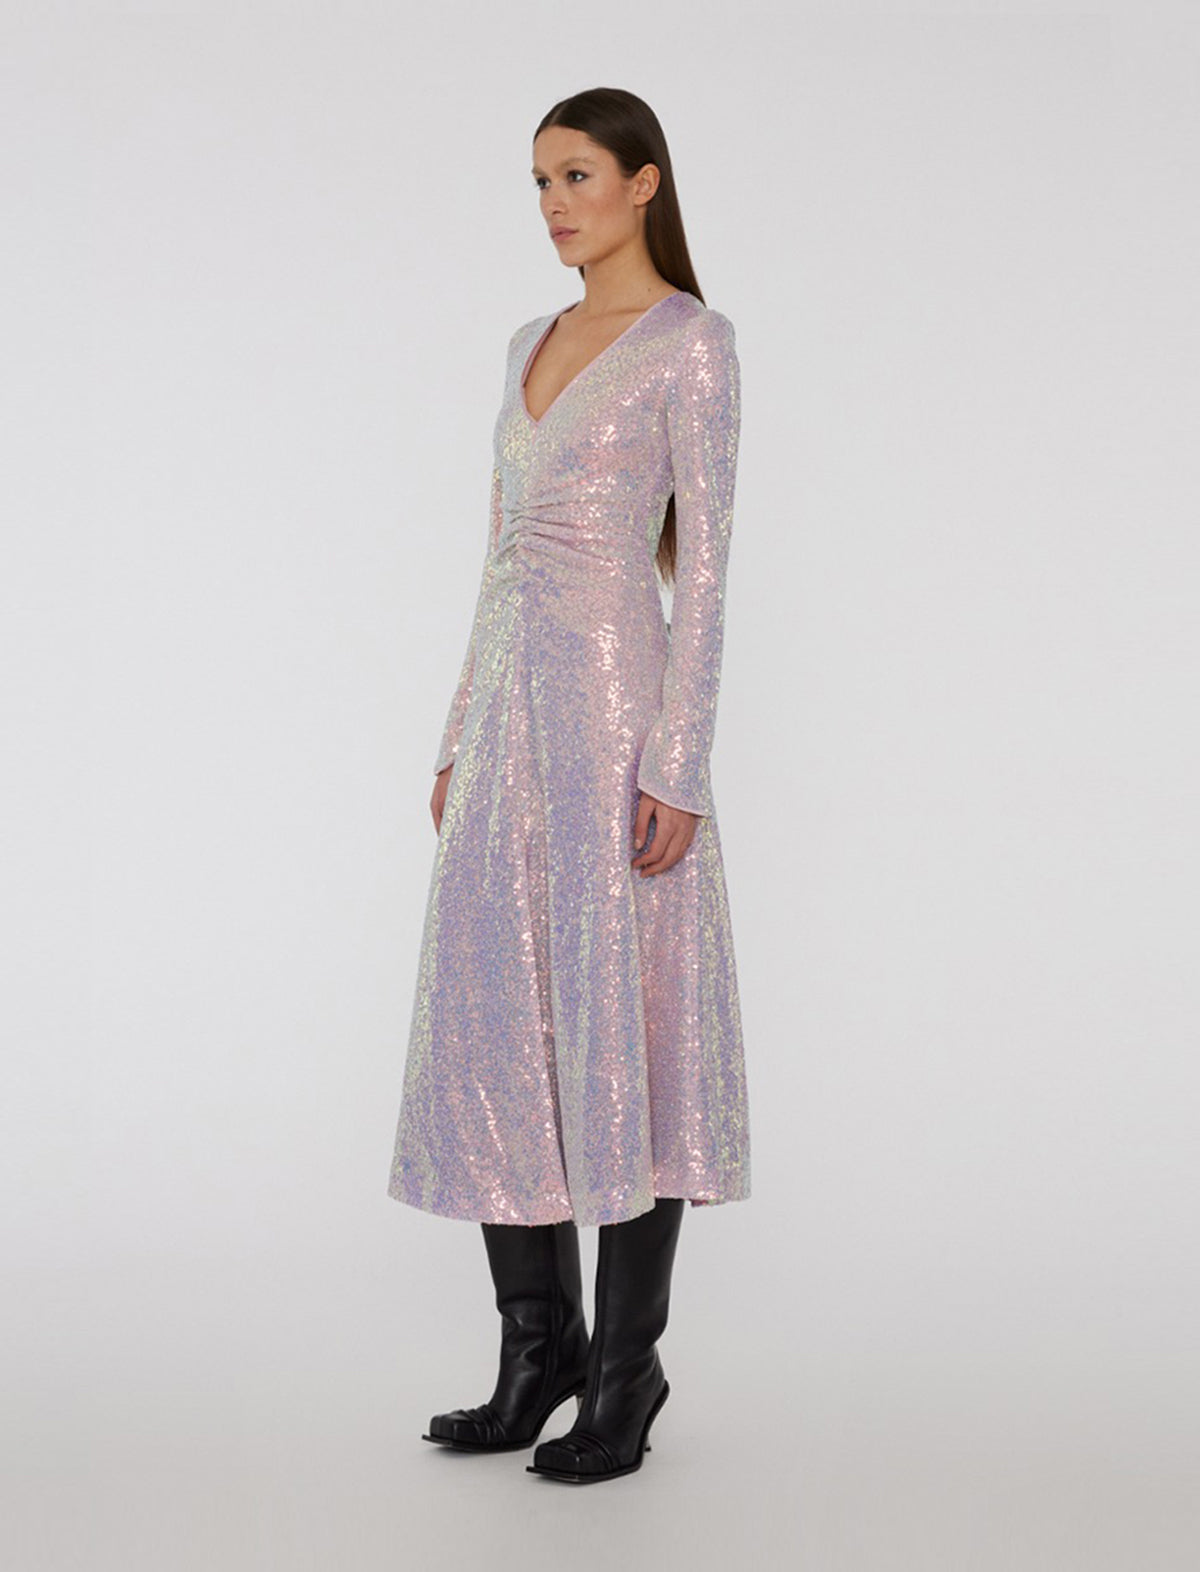 ROTATE Sierra Sequin Midi Dress in Sachet Pink